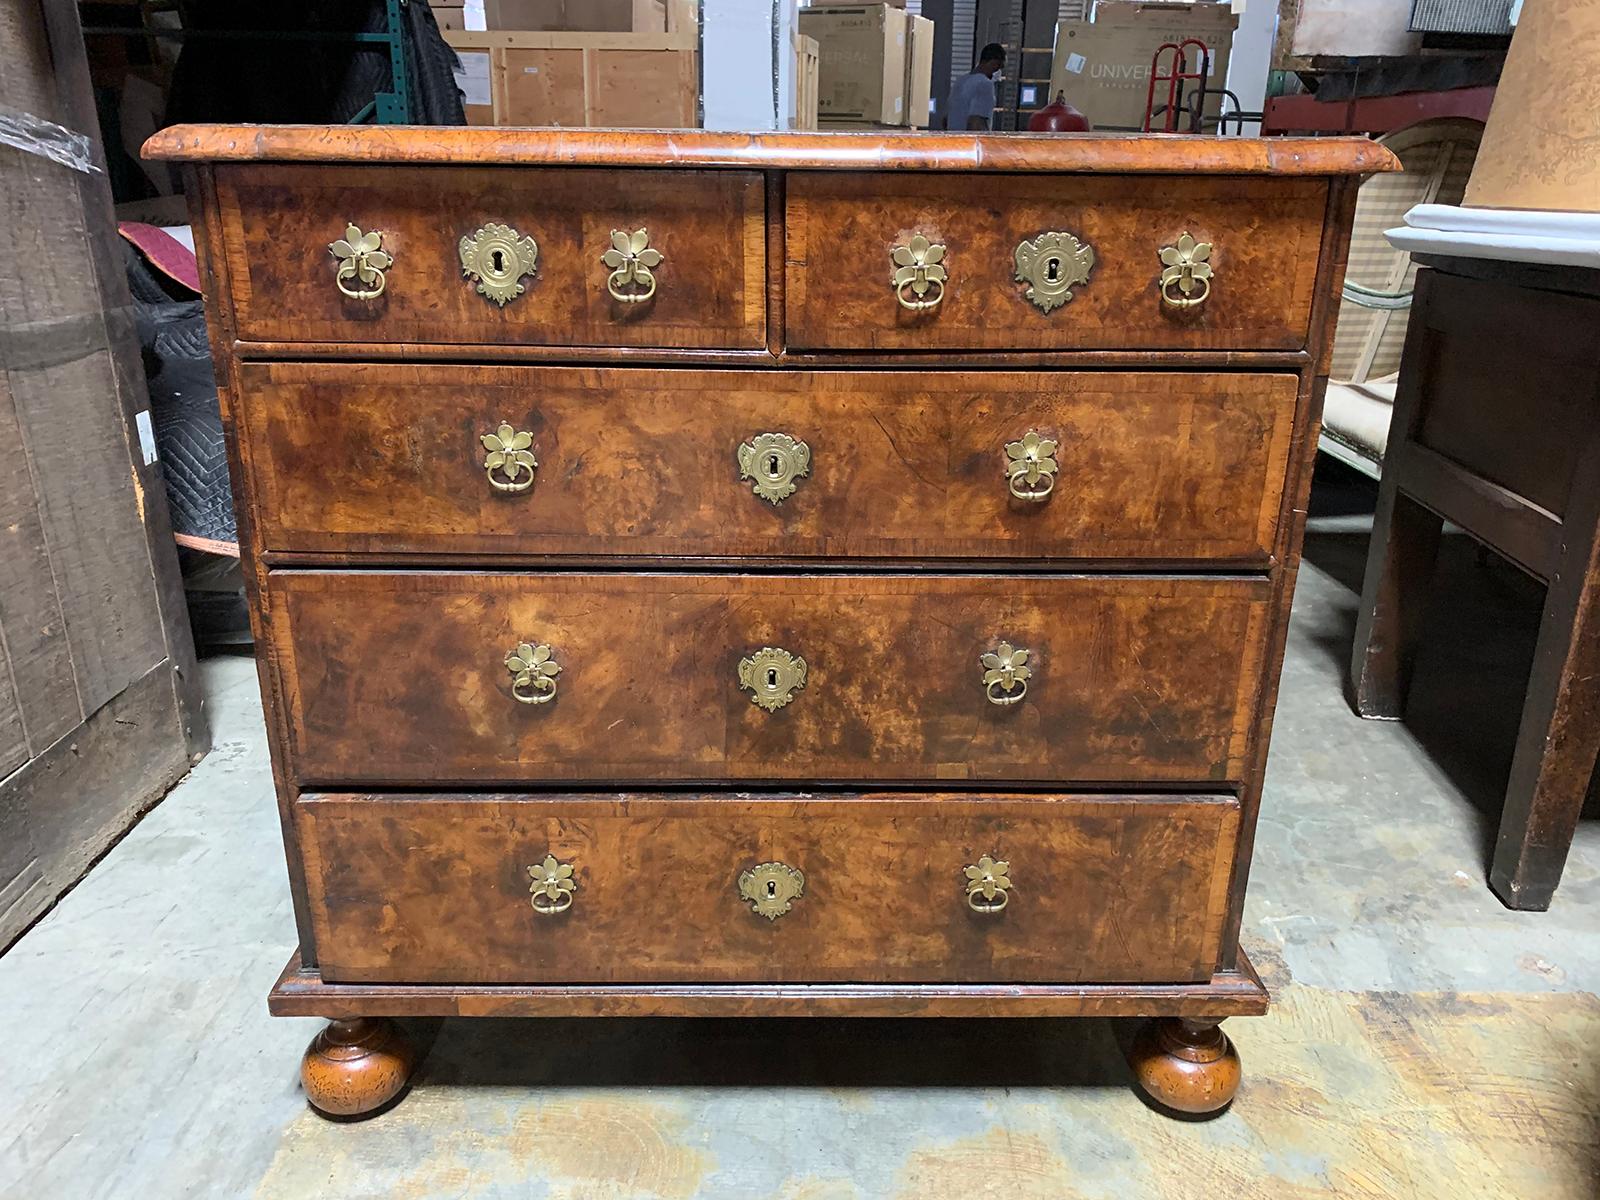 18th-19th century English burled walnut five-drawer chest, original brass hardware.